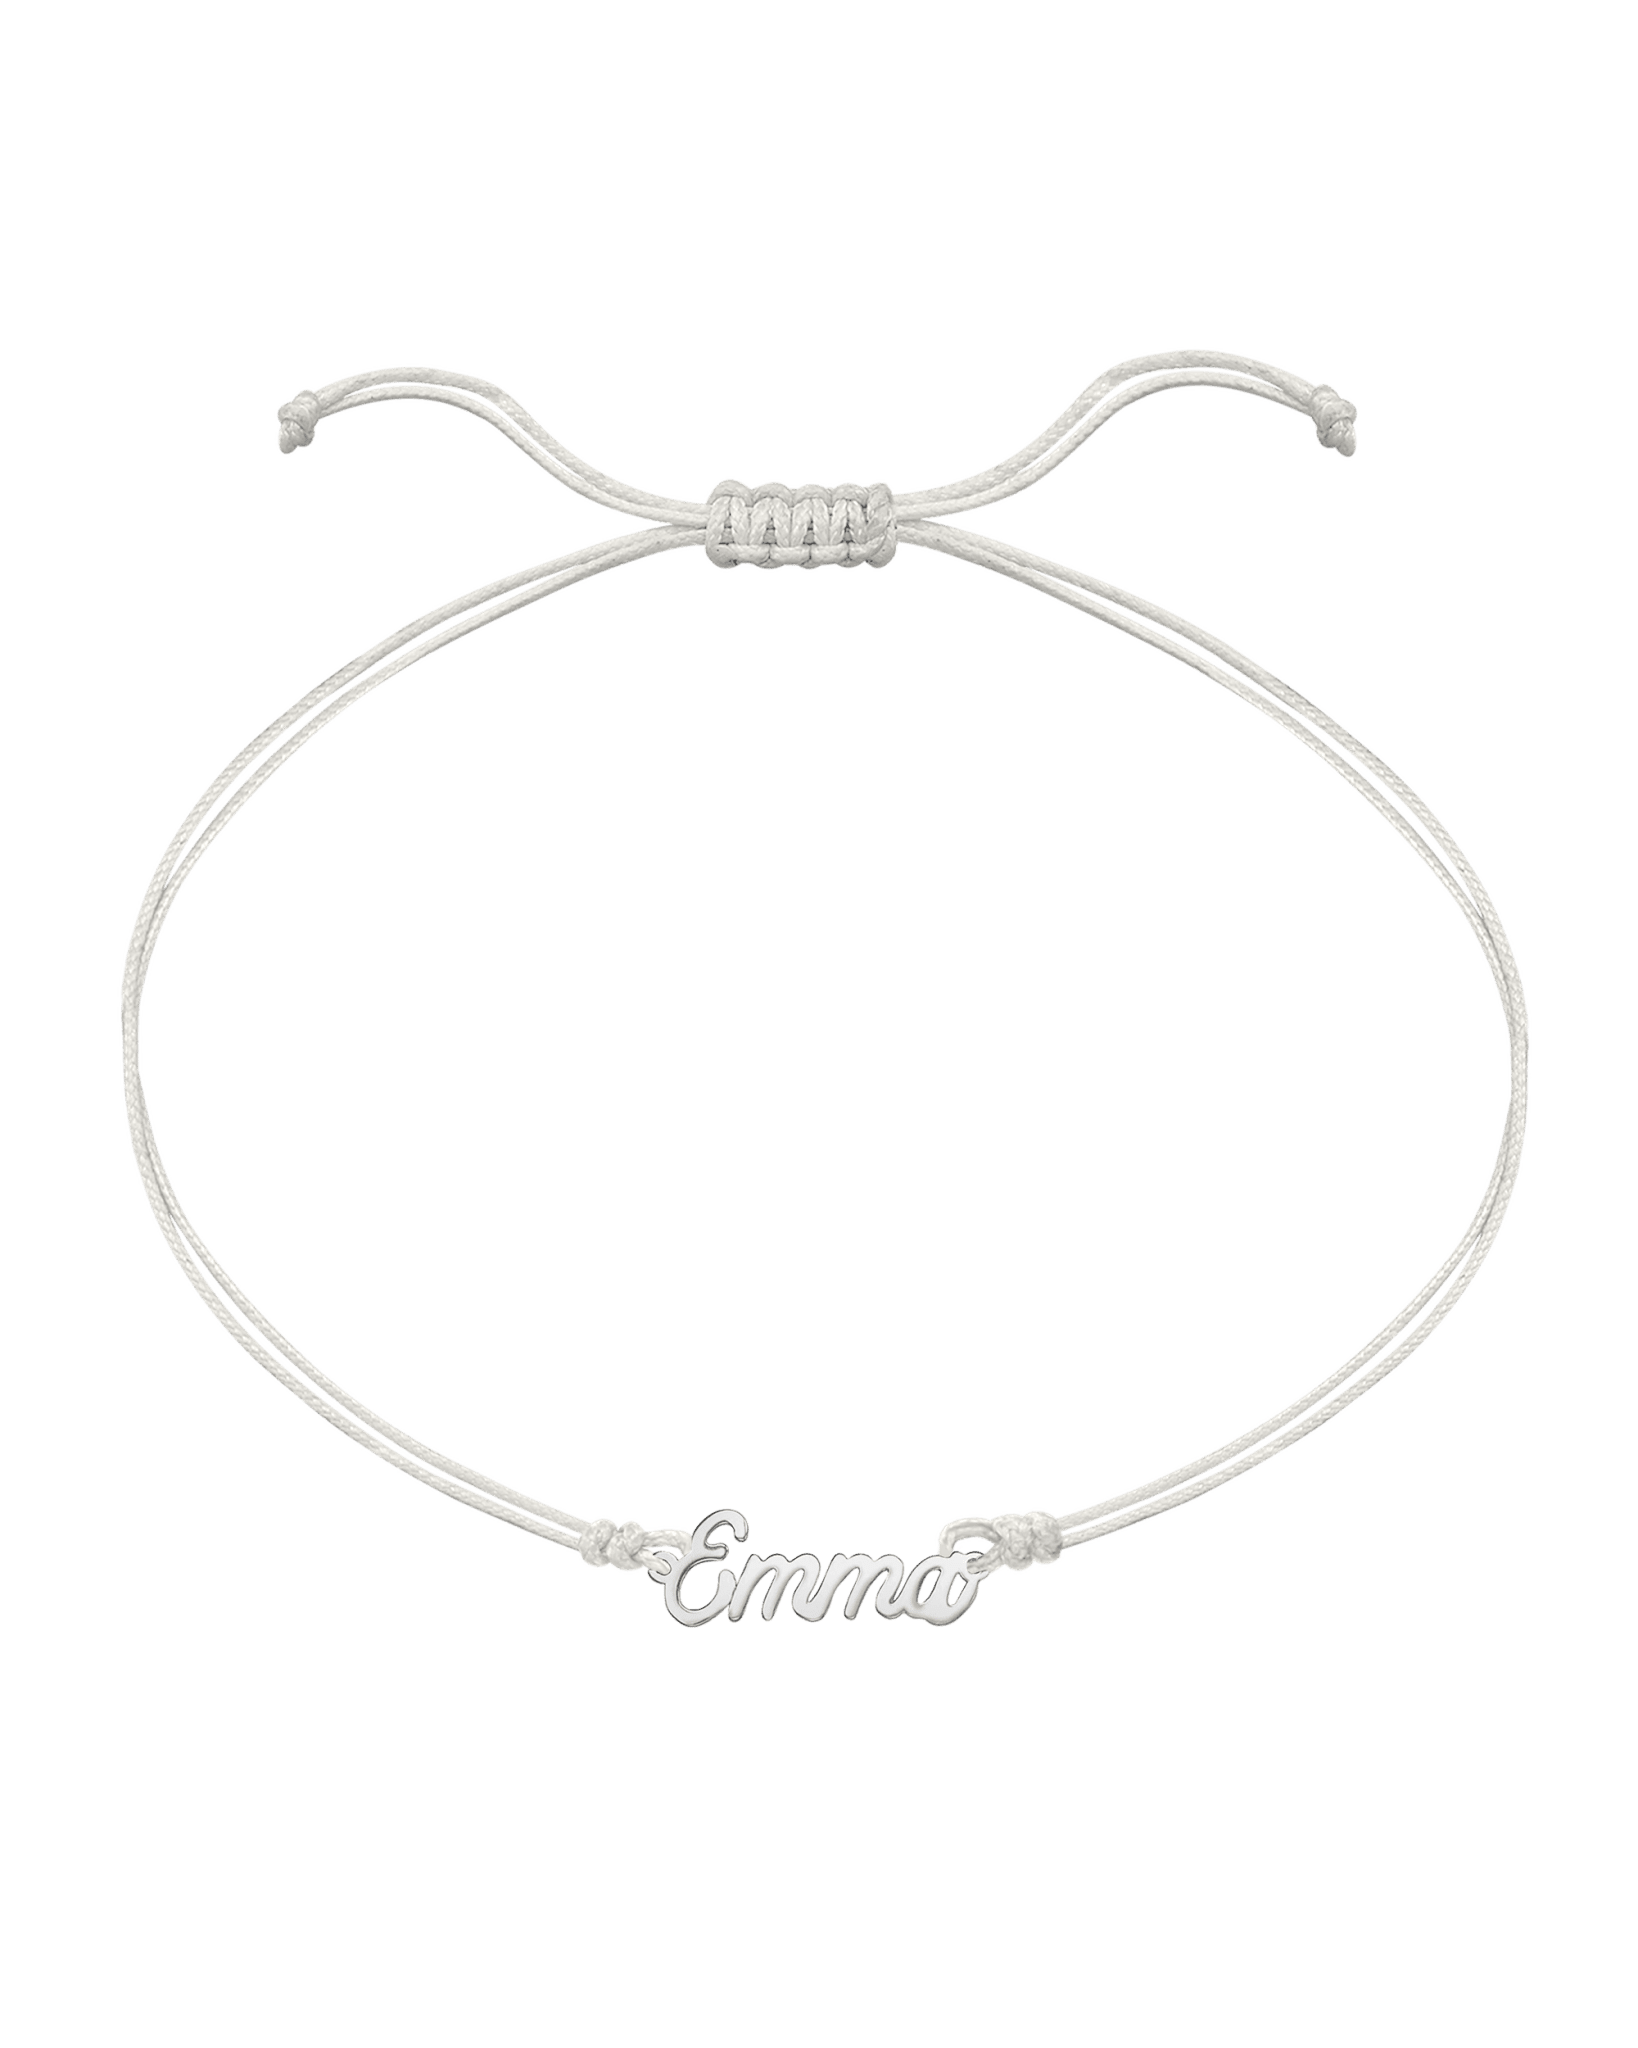 Name Plate String of Love - 14K White Gold Bracelets 14K Solid Gold Pearl 1 